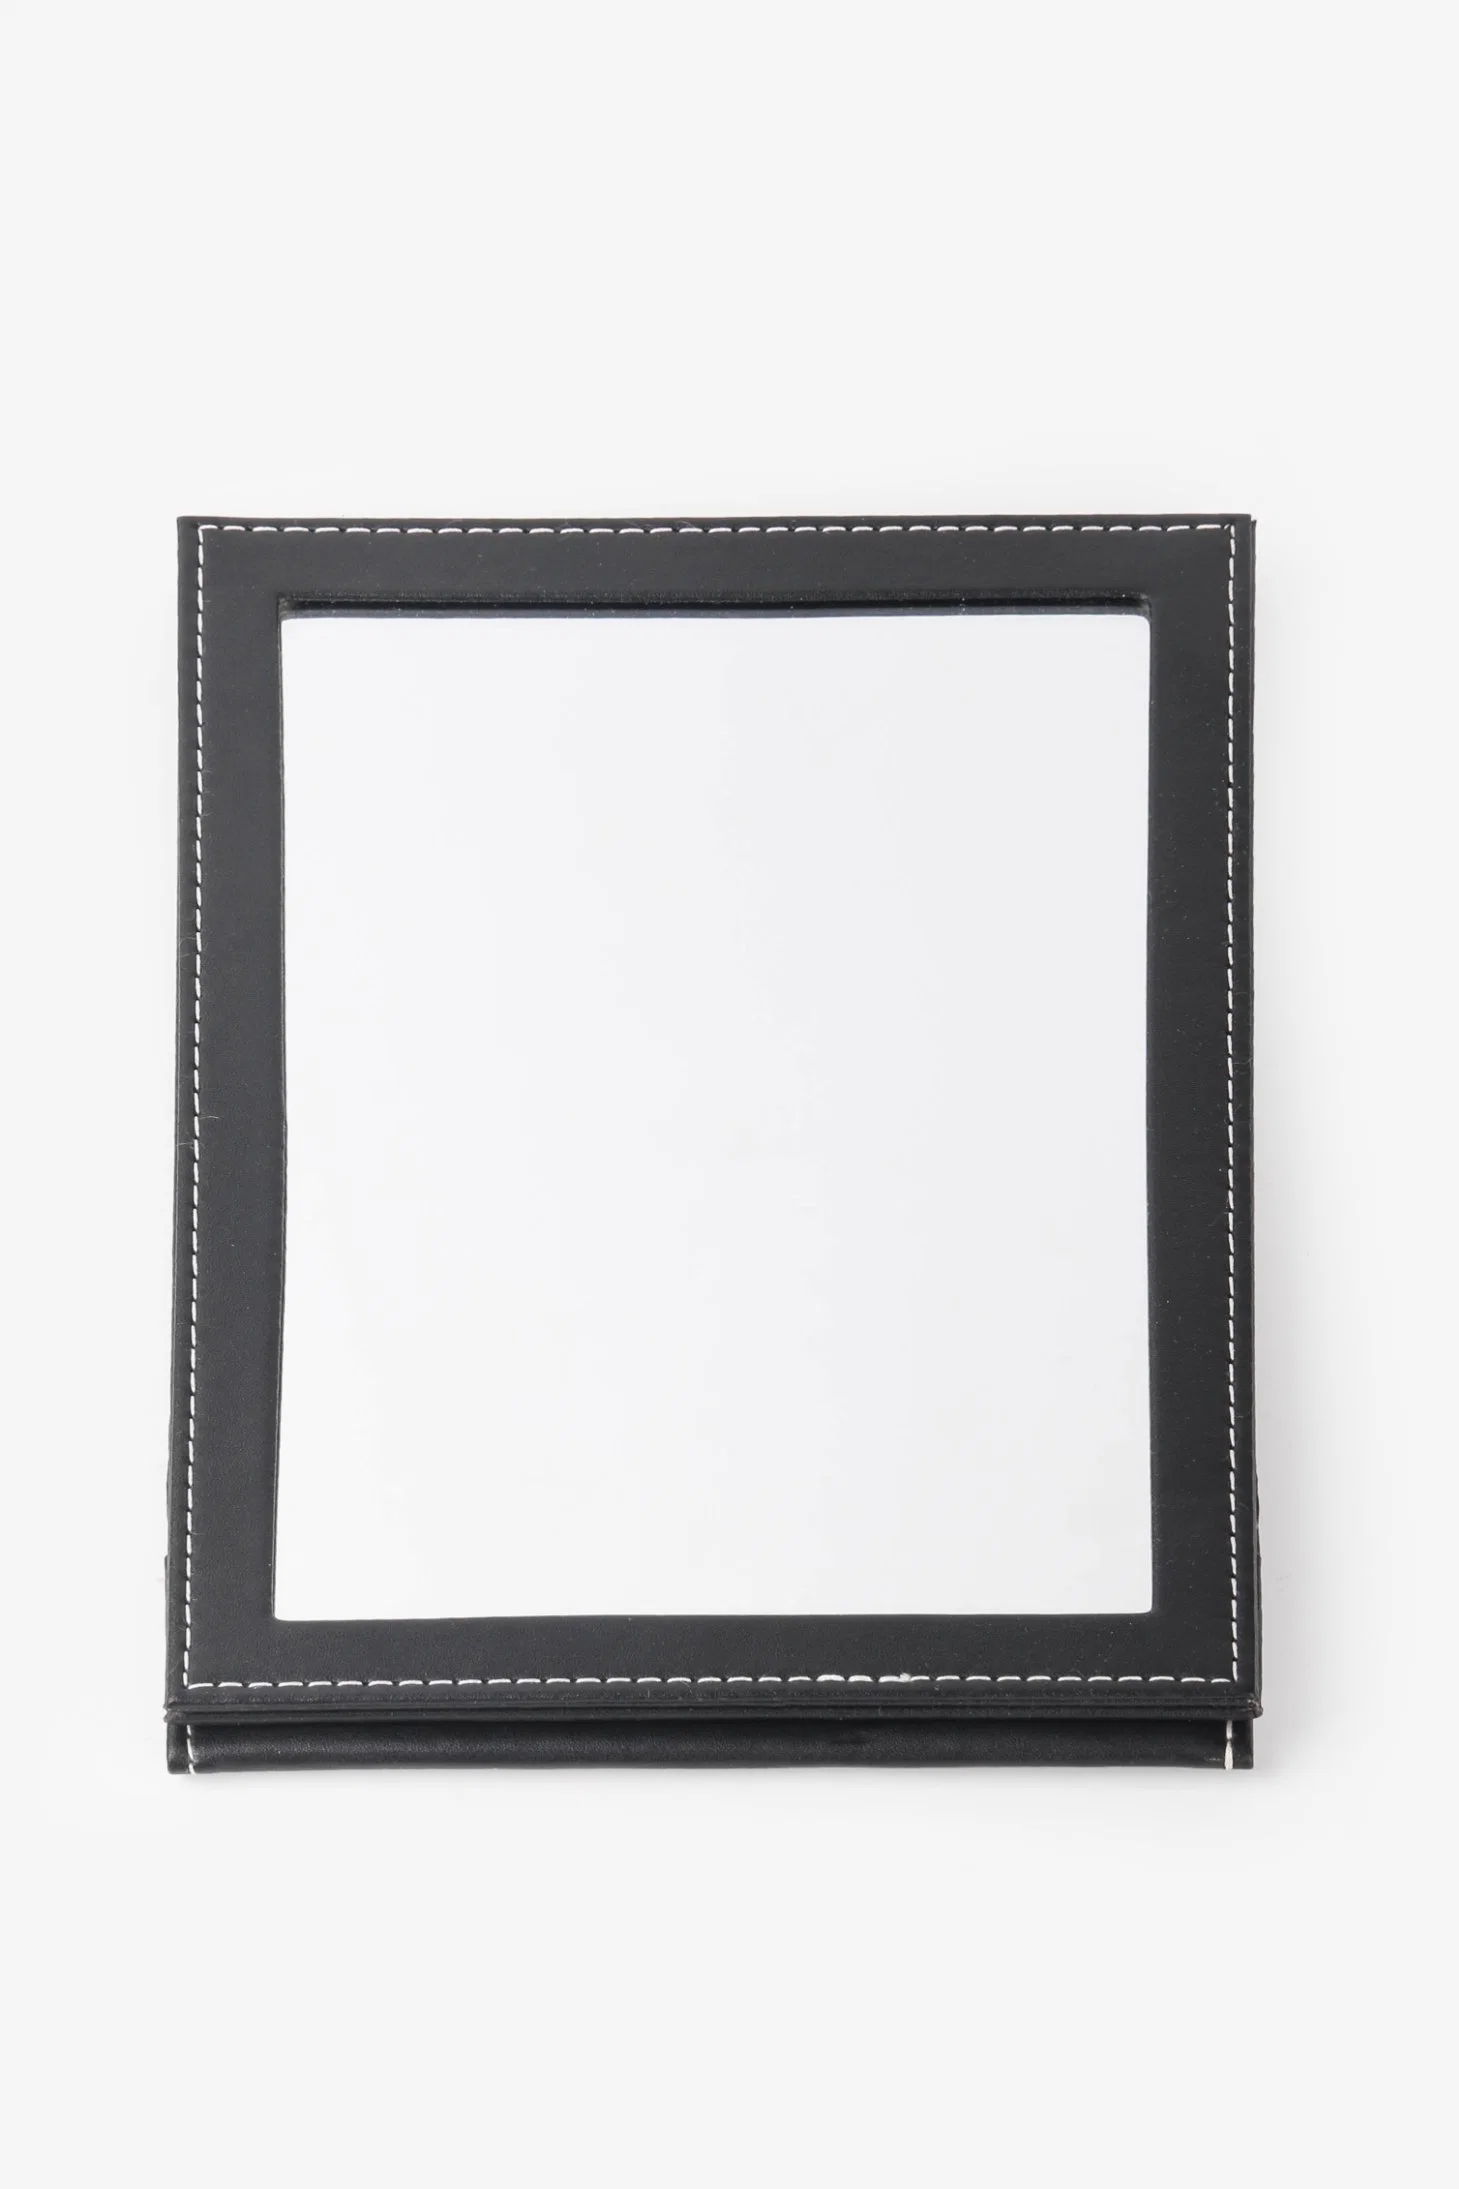 New Folding Desktop Portable PU Leather Makeup Student Dormitory Desktop Vanity Mirror